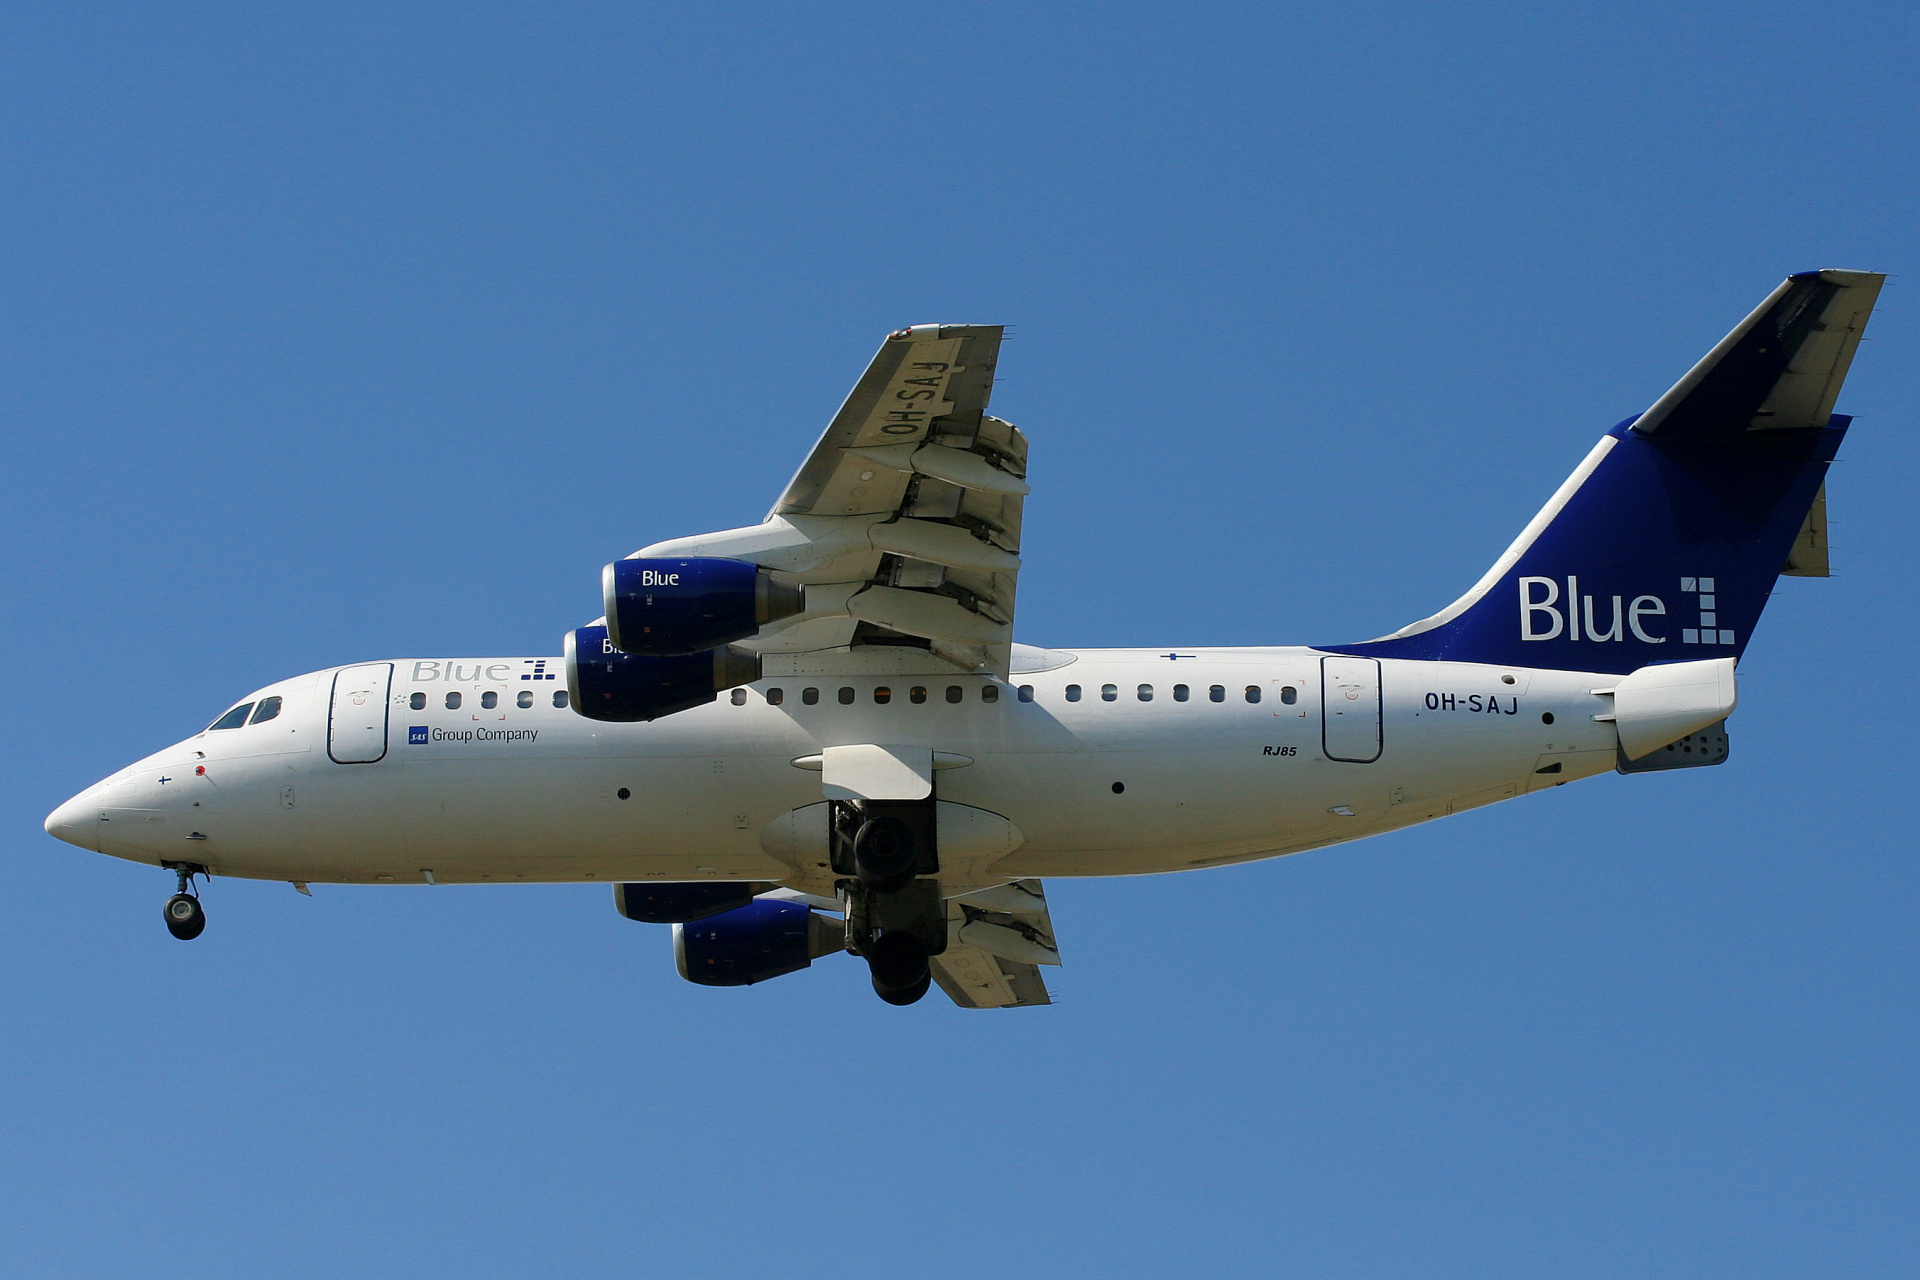 OH-SAJ, Blue1 (Aircraft » EPWA Spotting » BAe 146 and revisions » Avro RJ85)